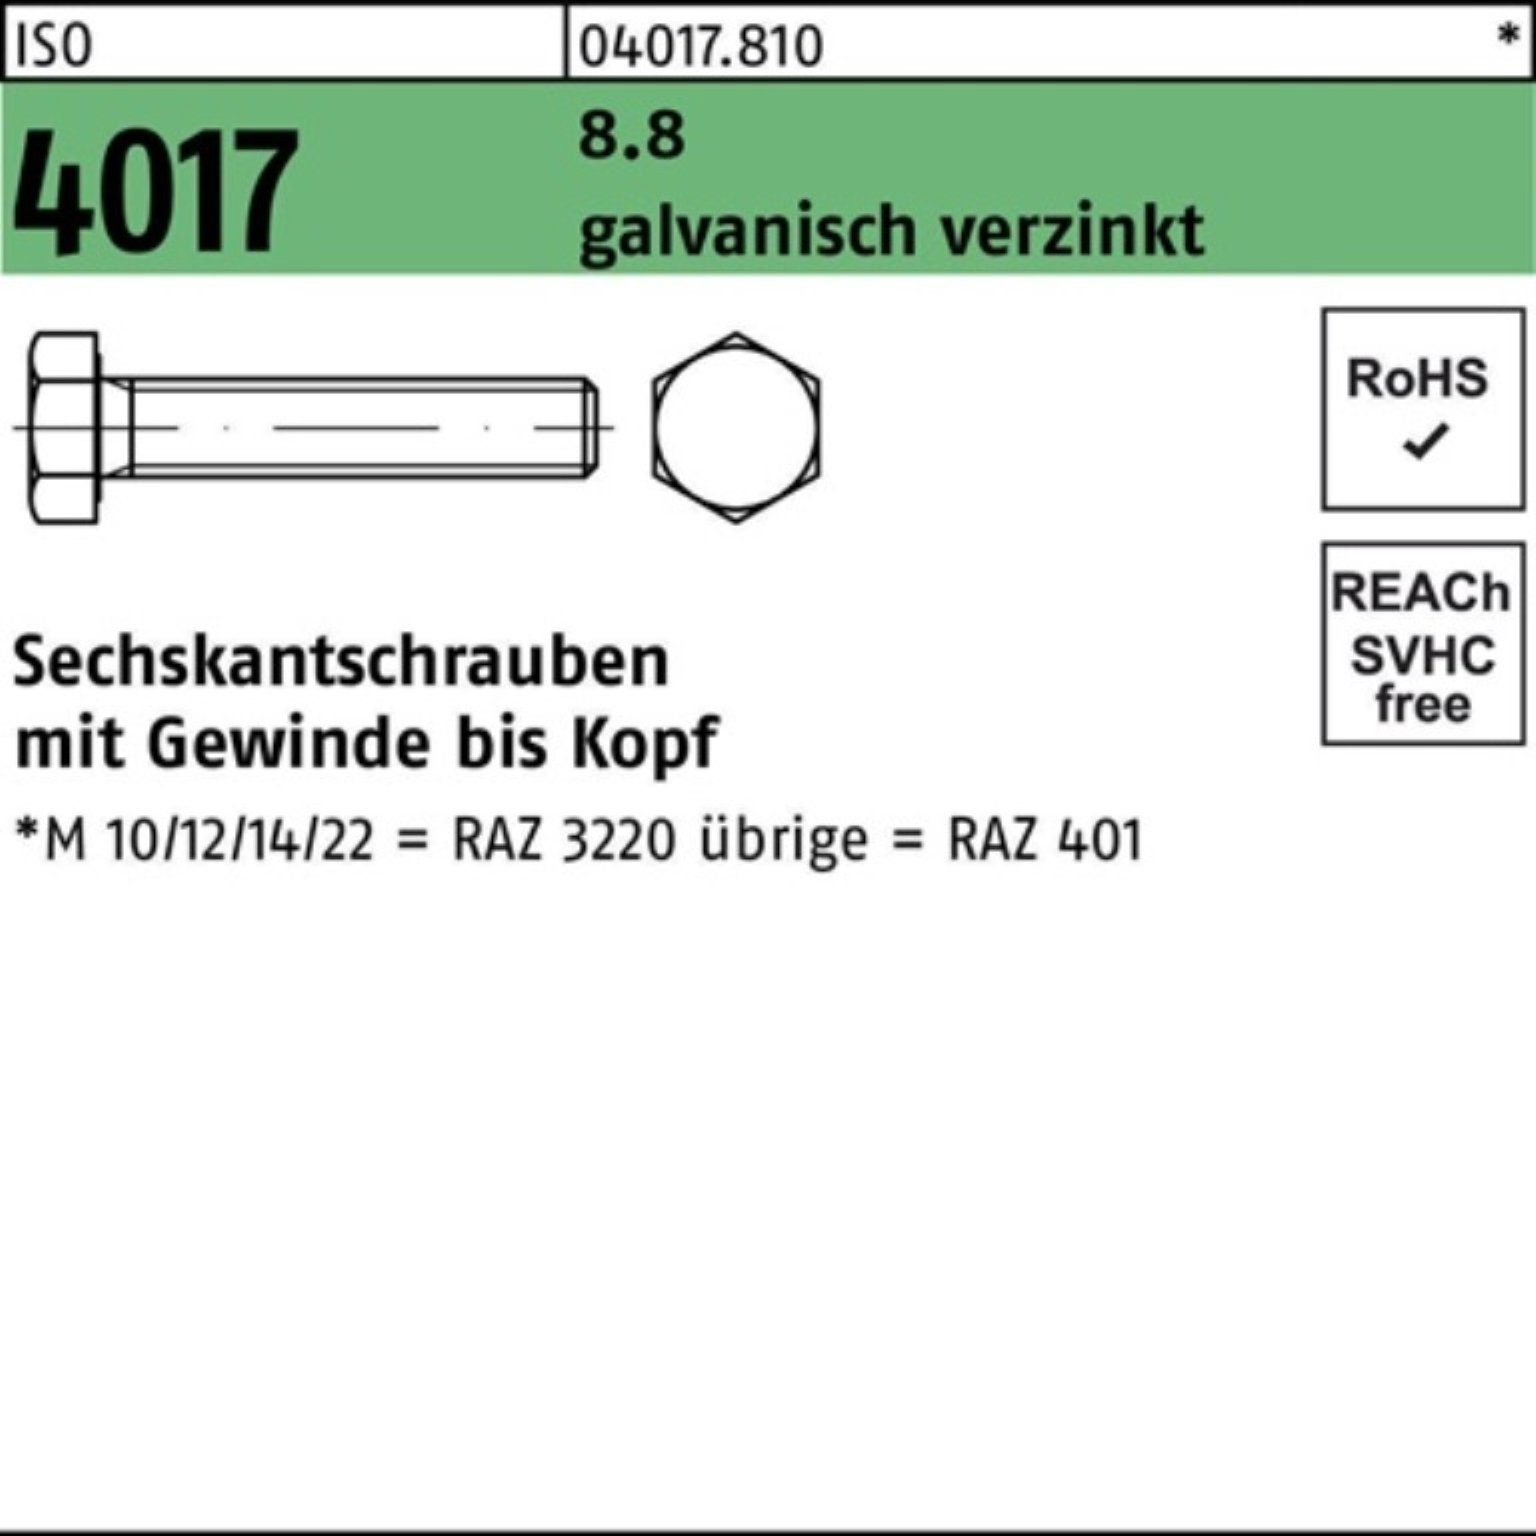 Bufab Sechskantschraube 200er 4017 galv.verz. ISO Pack 8.8 200 M8x 45 Sechskantschraube St VG